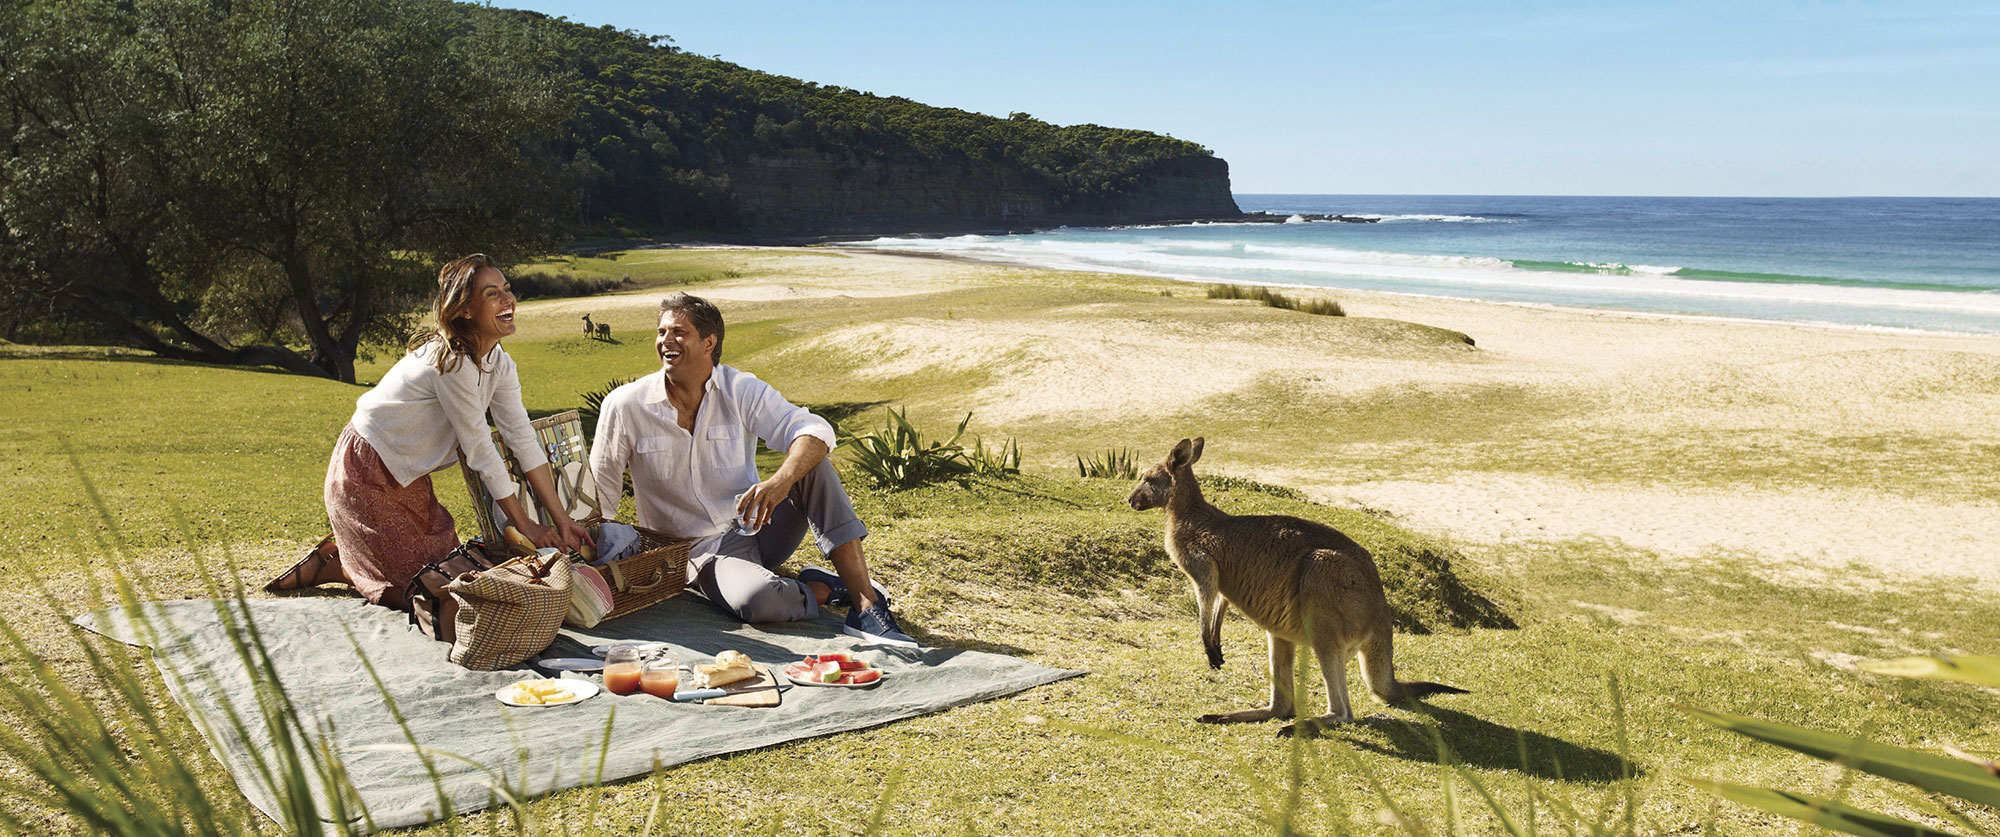 best multi destination travel packages - Pebbly beach couple - Kangaroo beach